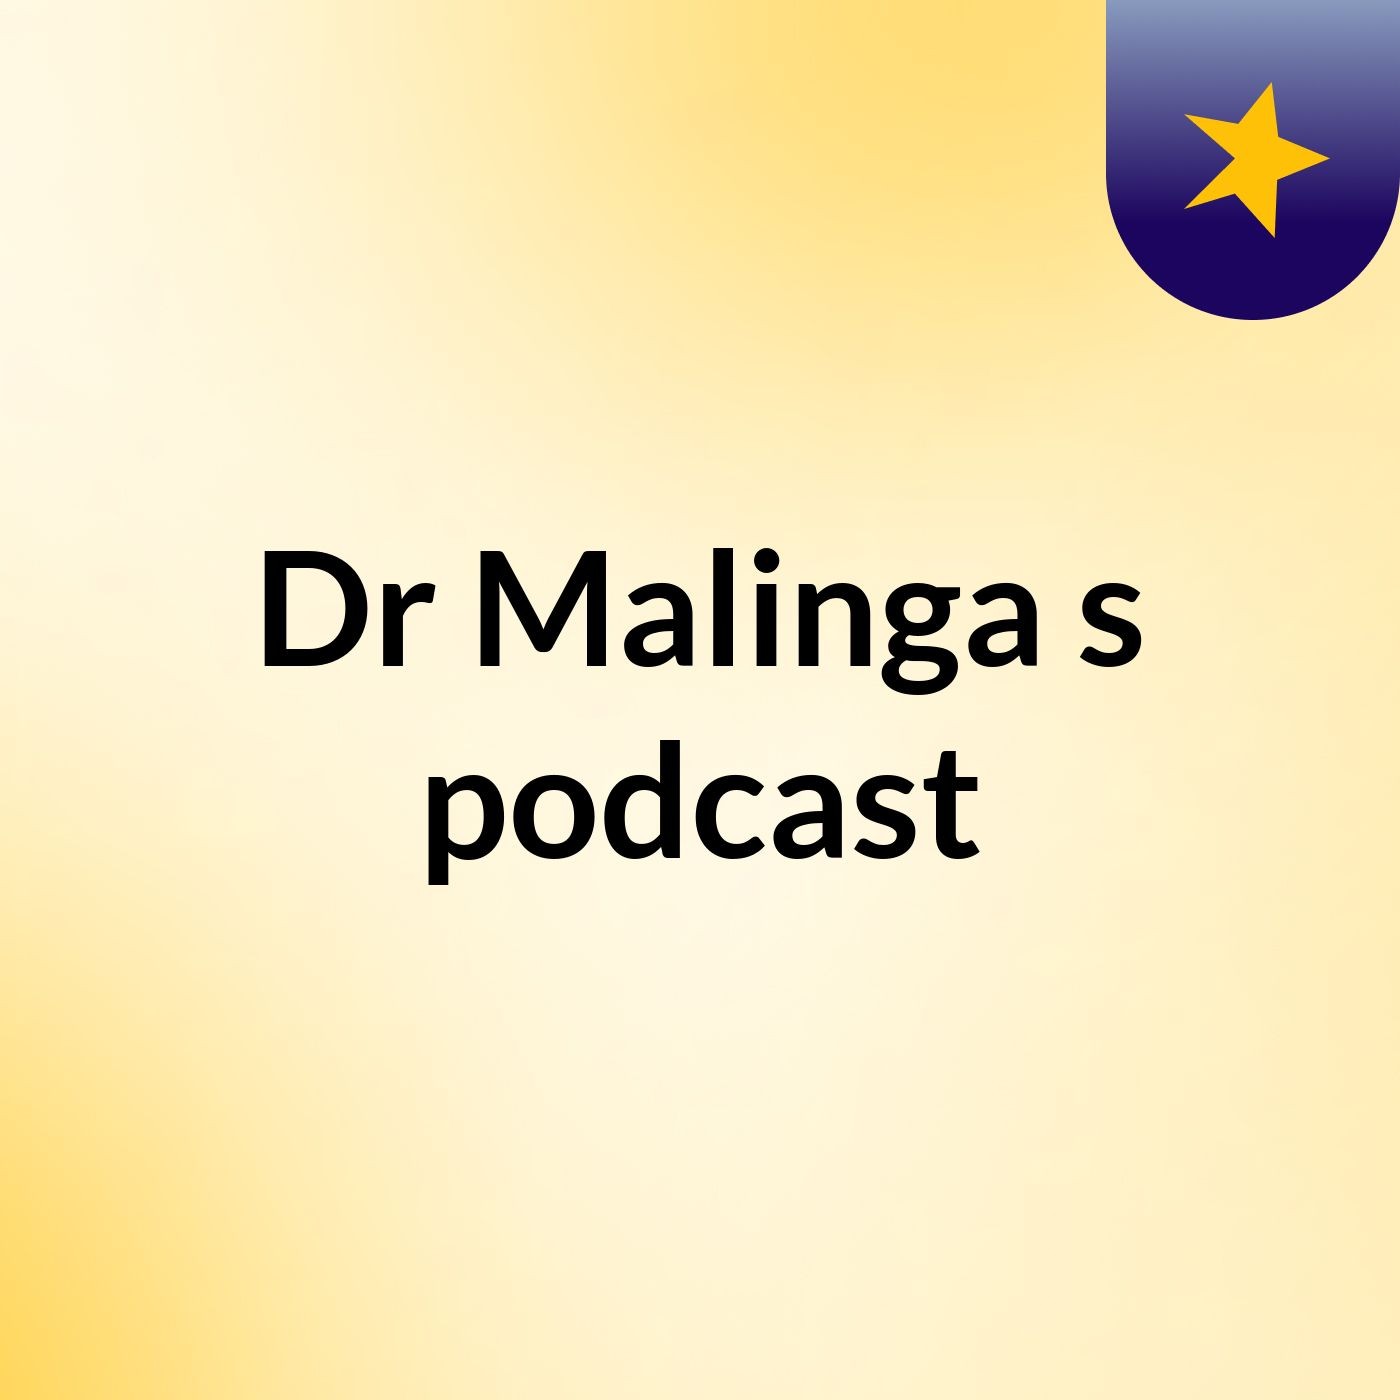 Dr Malinga's podcast